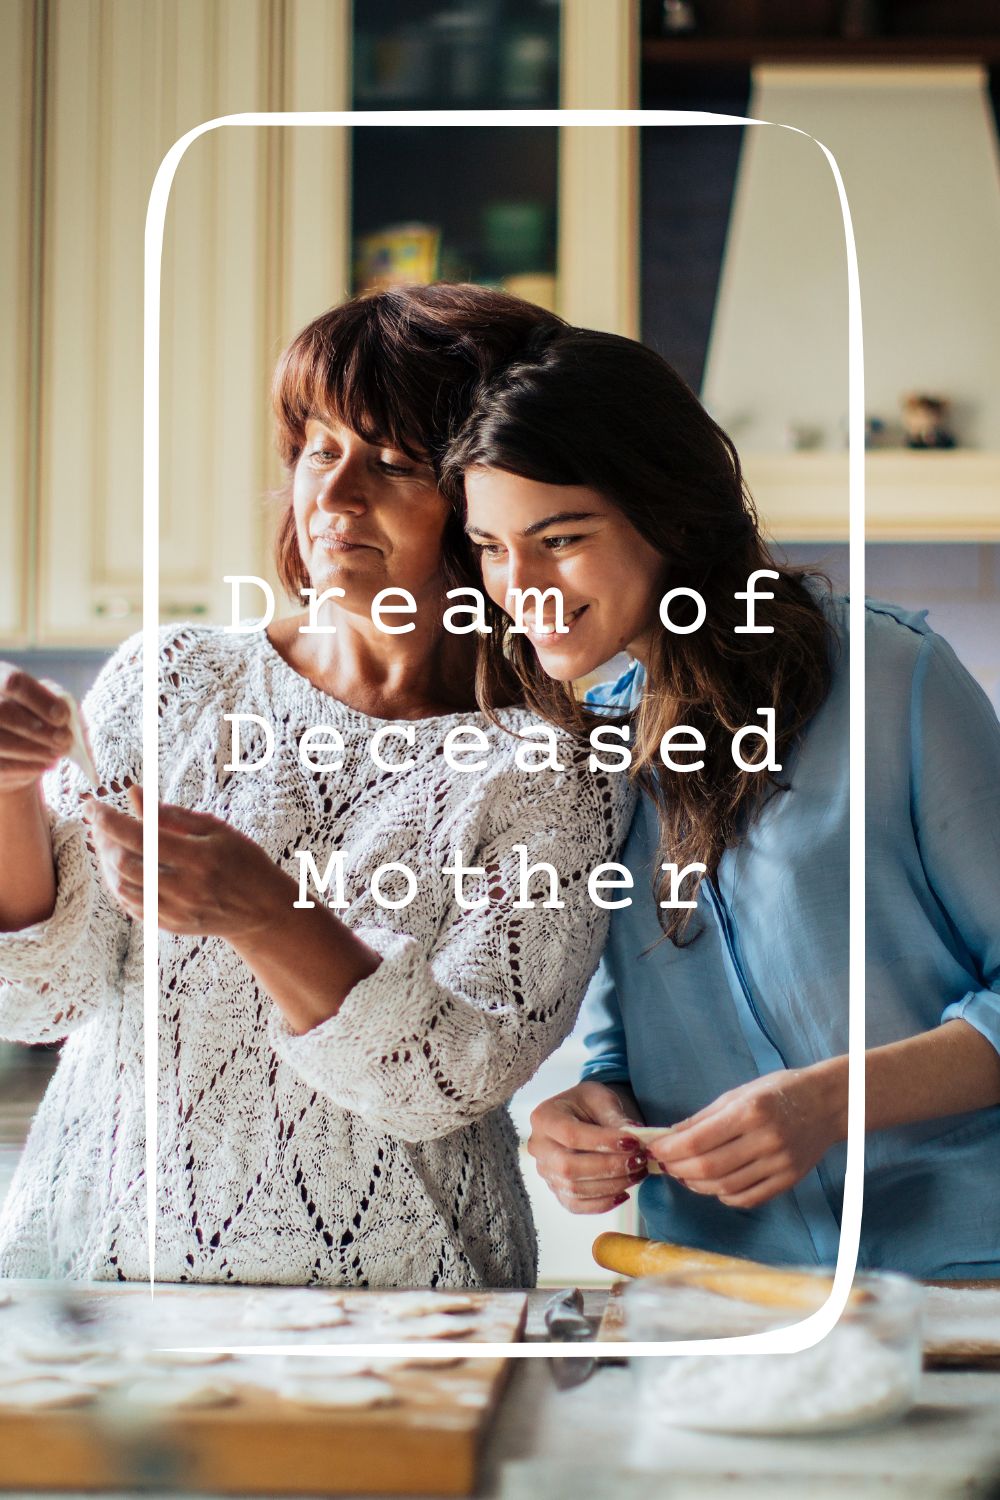 12 Dream of Deceased Mother Meanings4